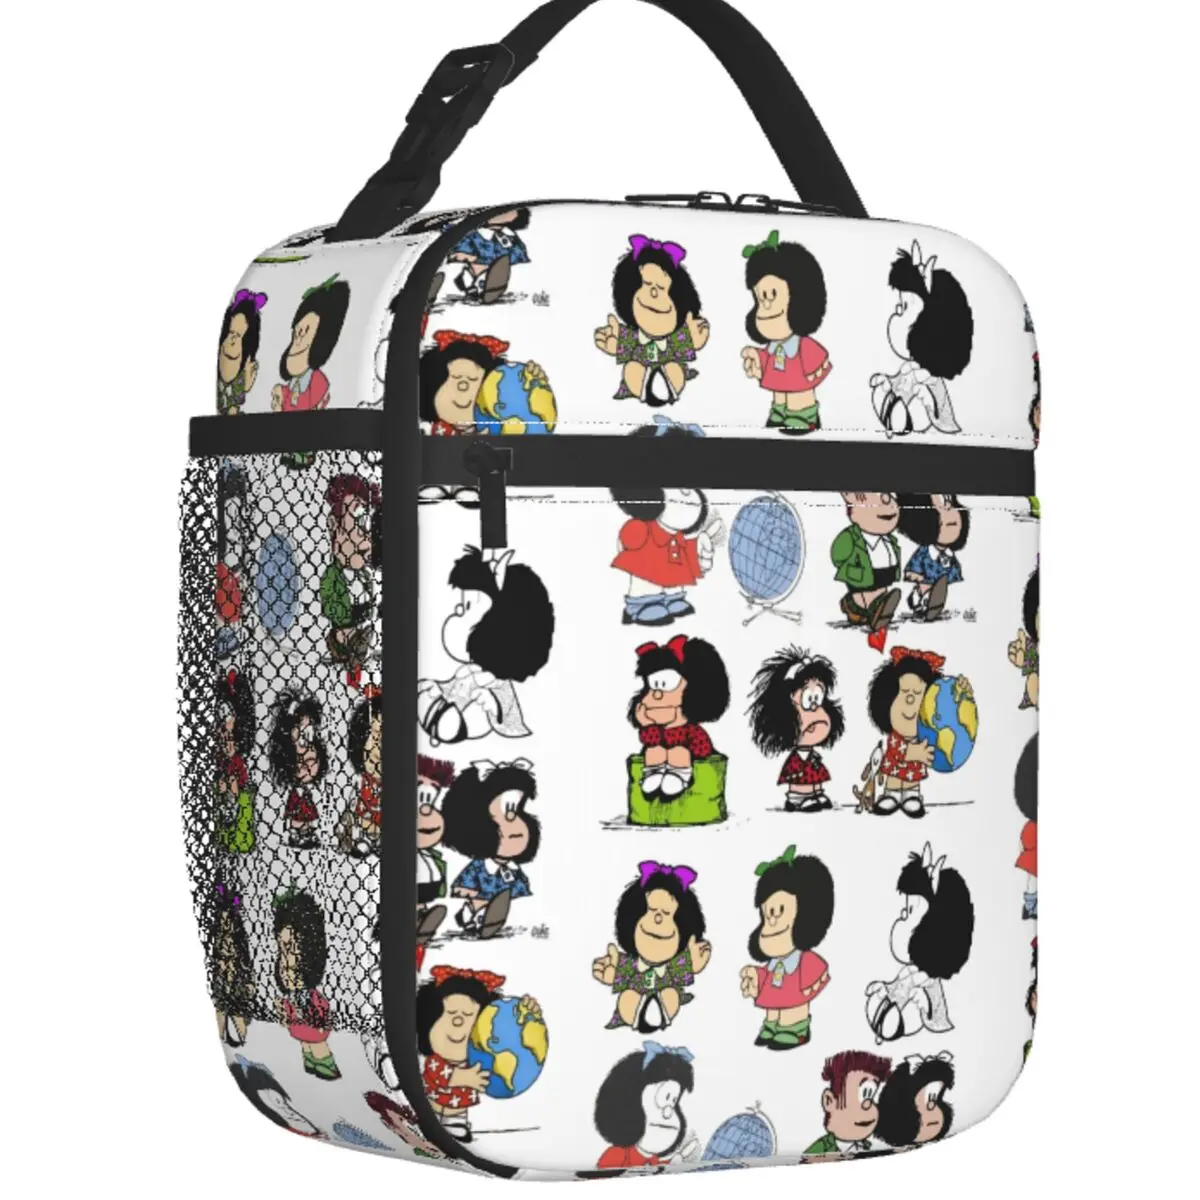 Quino Mafada Manga Insulated Lunch Bags for Women Argentina Cartoon Portable Cooler Thermal Bento Box School